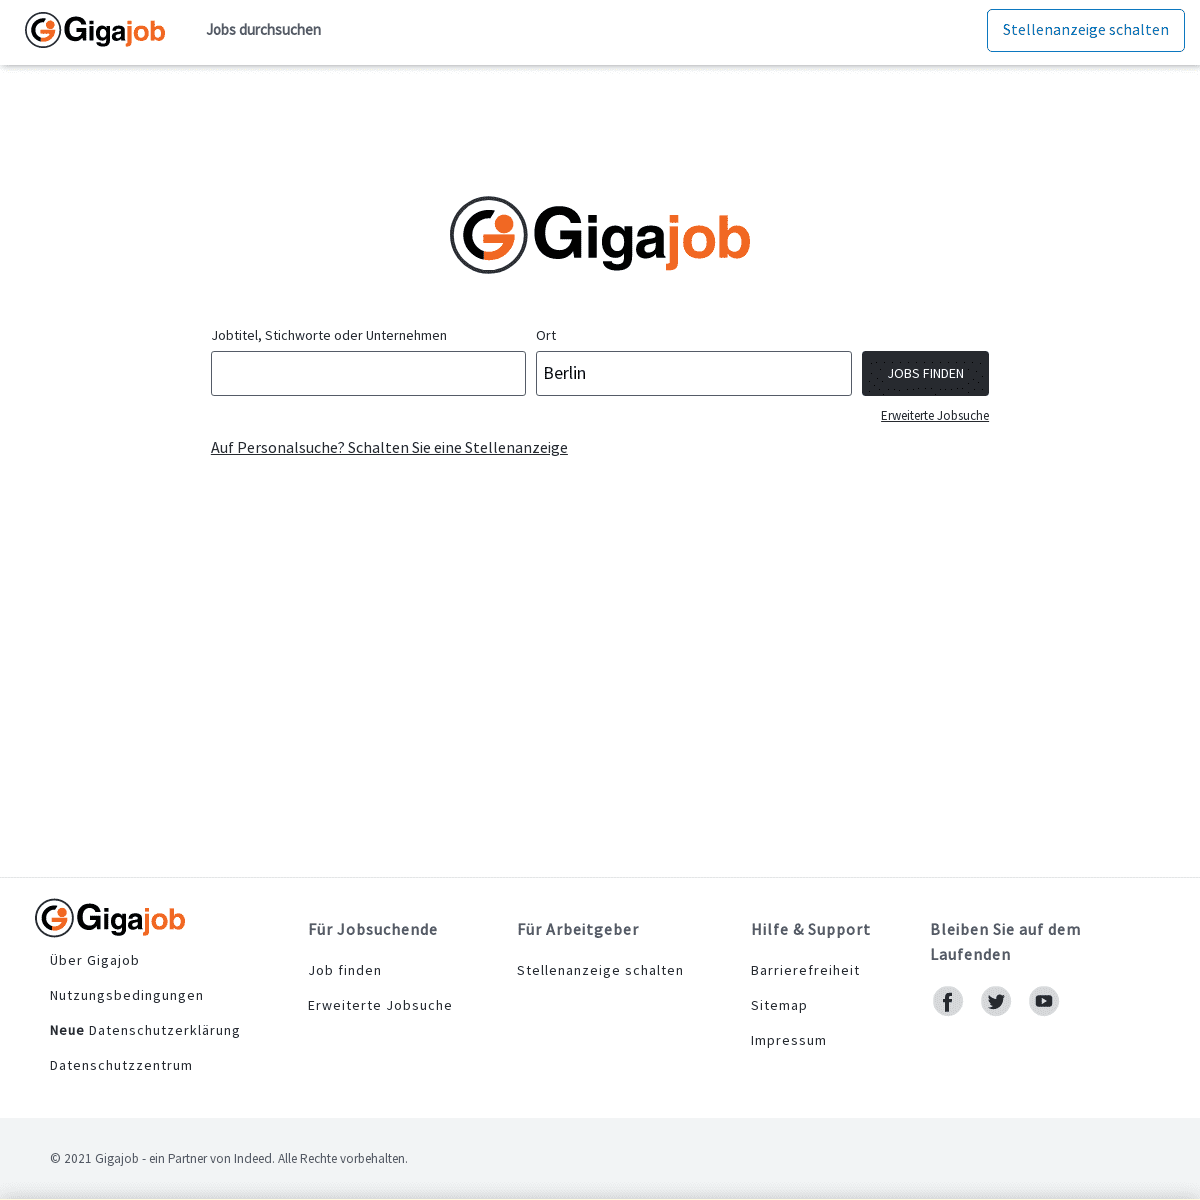 A complete backup of https://gigajob.com